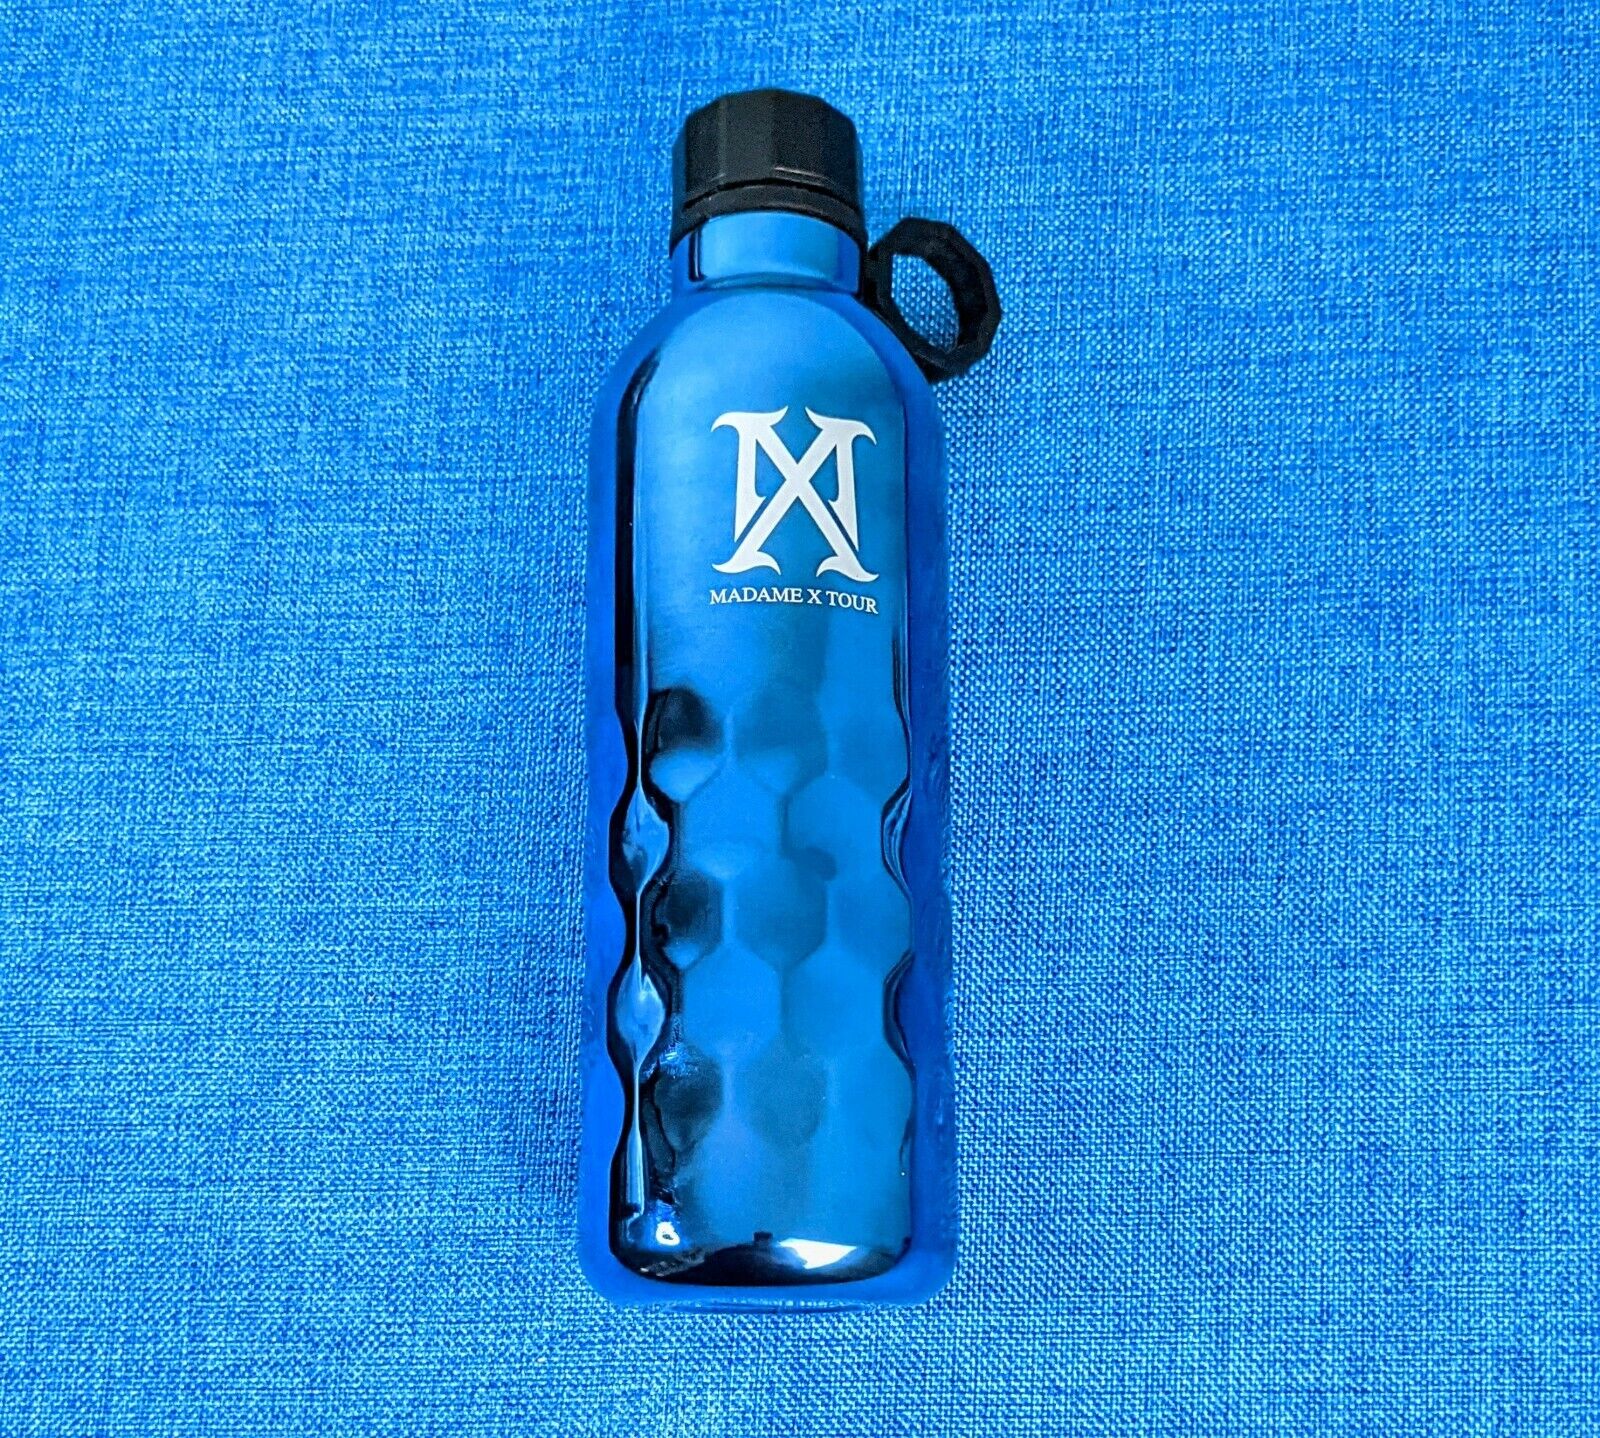 Madonna Madame X Tour Water Bottle Blue Metallic Limited Venue Merch Promo